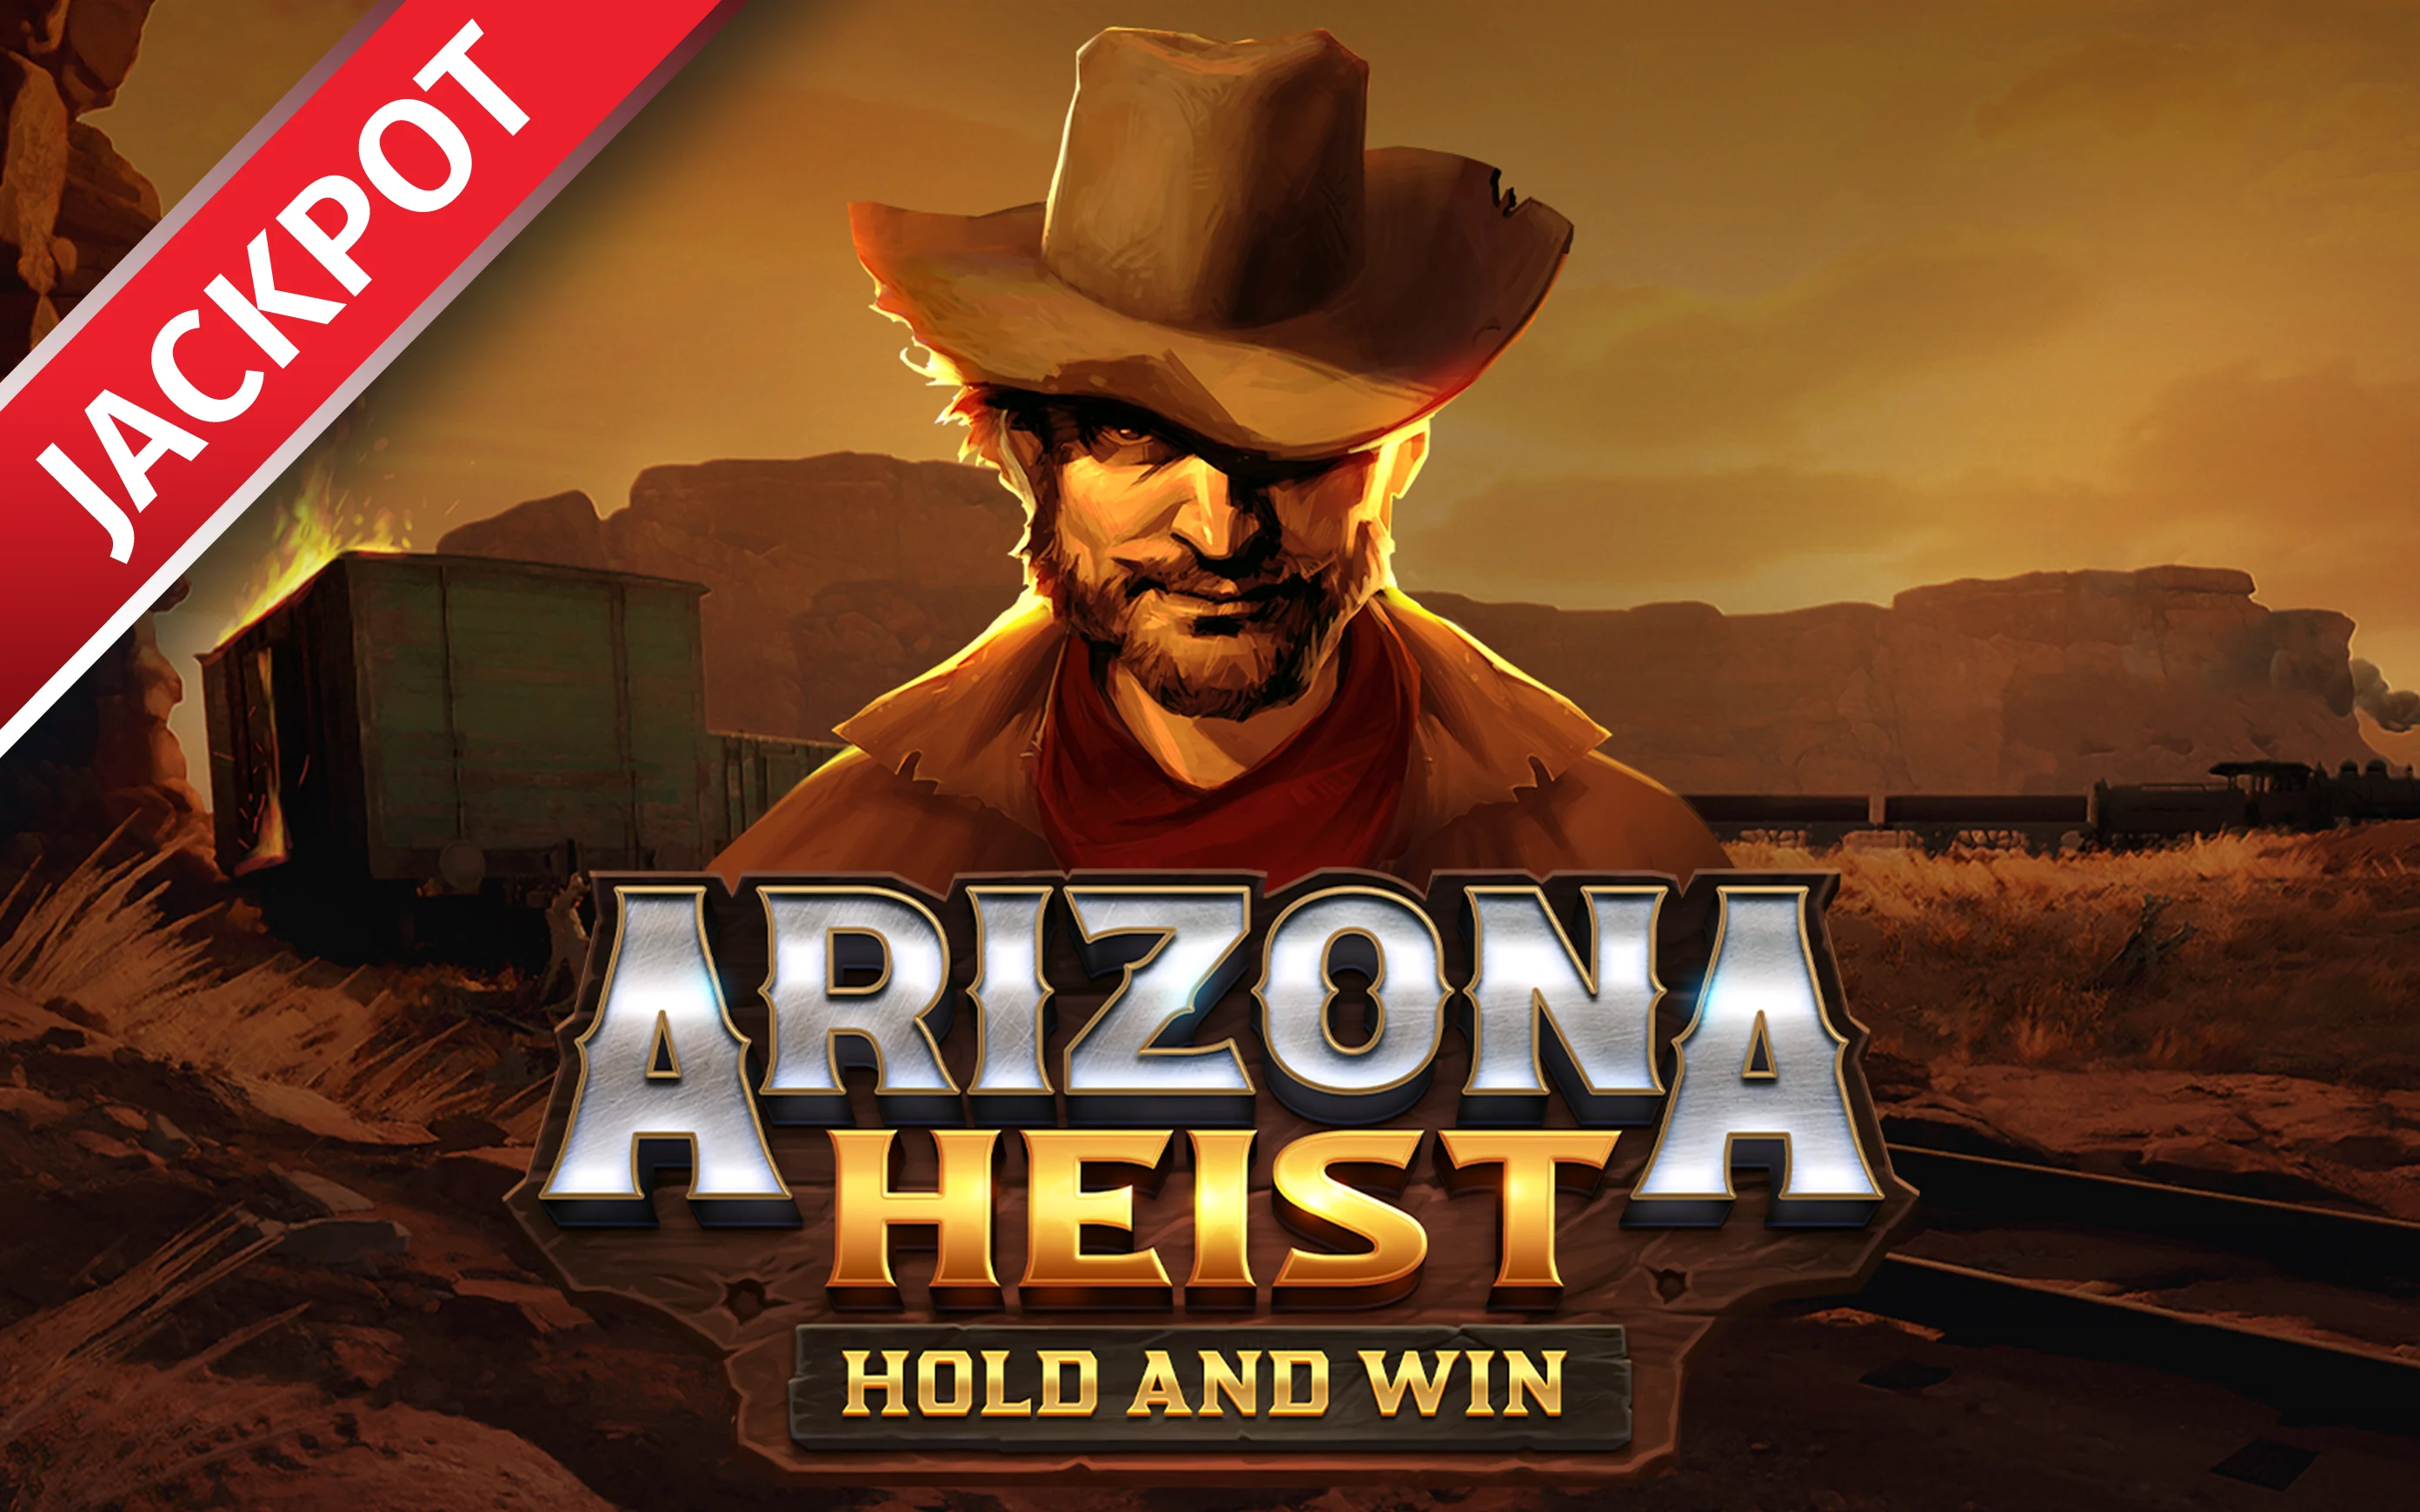 Gioca a Arizona Heist: Hold and Win sul casino online Starcasino.be